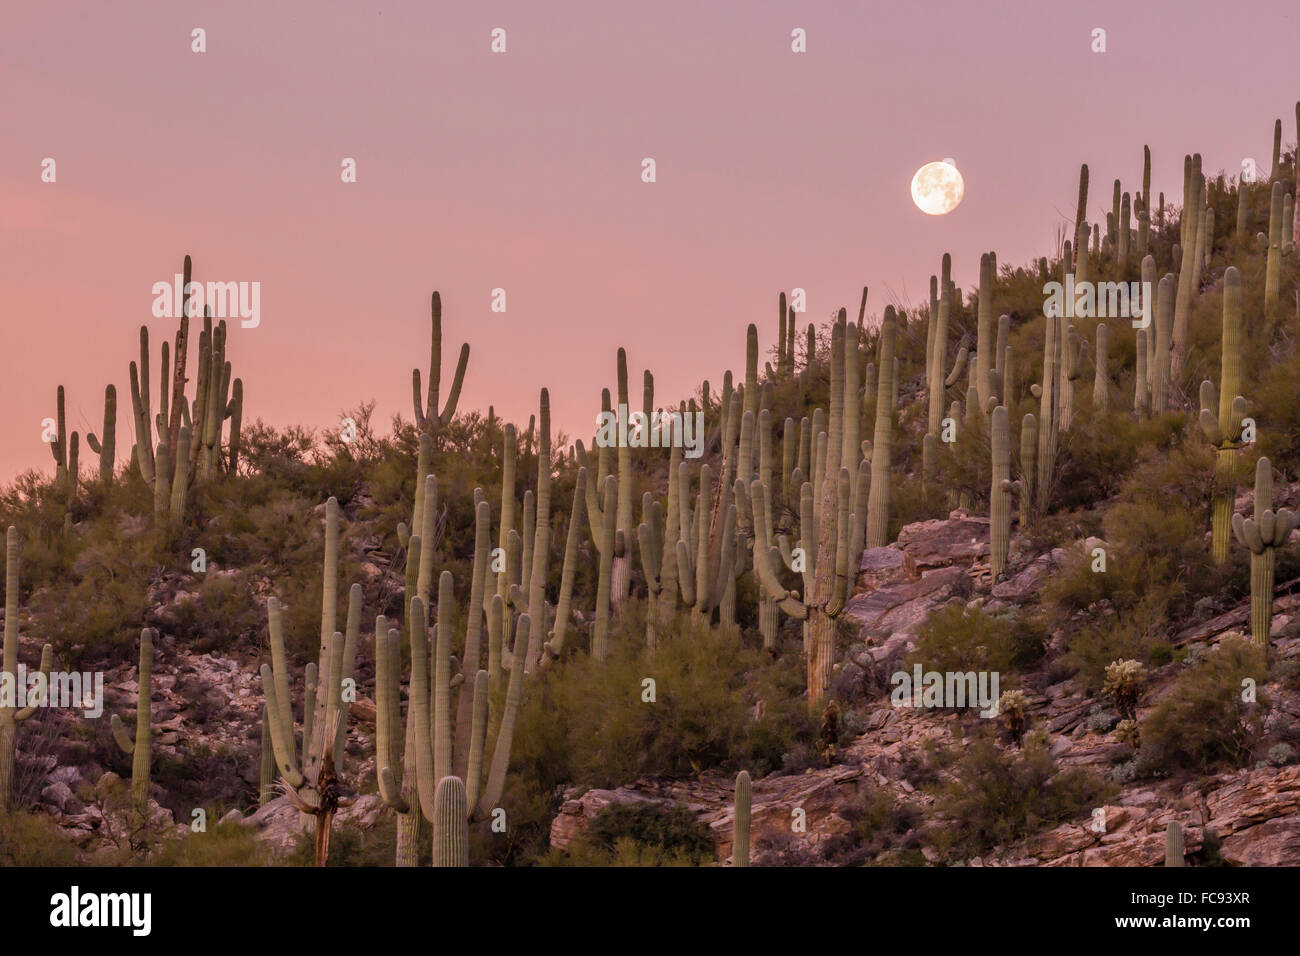 Giant saguaro cactus (Carnegiea gigantea), under full moon in the Catalina Mountains, Tucson, Arizona, United States of America Stock Photo